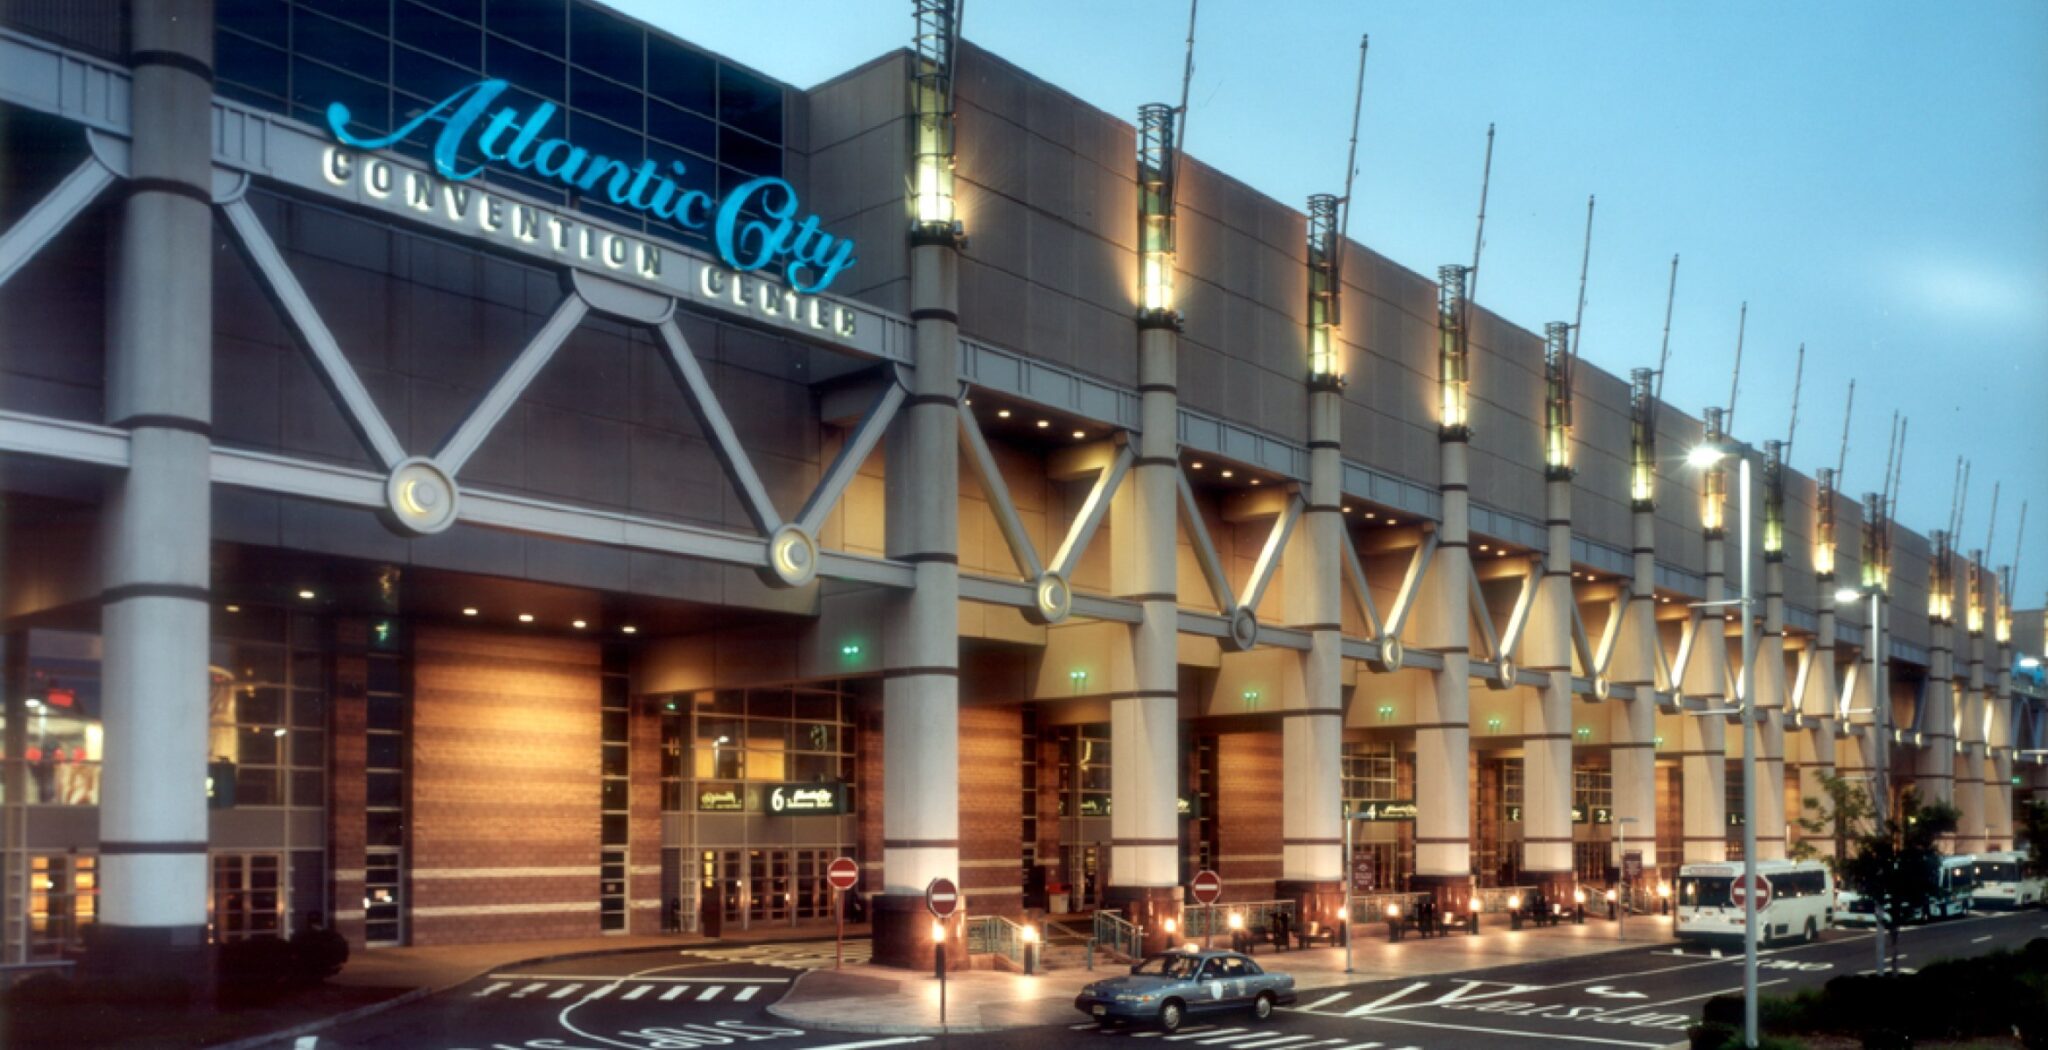 Atlantic City Convention Center Hosts Largest Sports & Entertainment